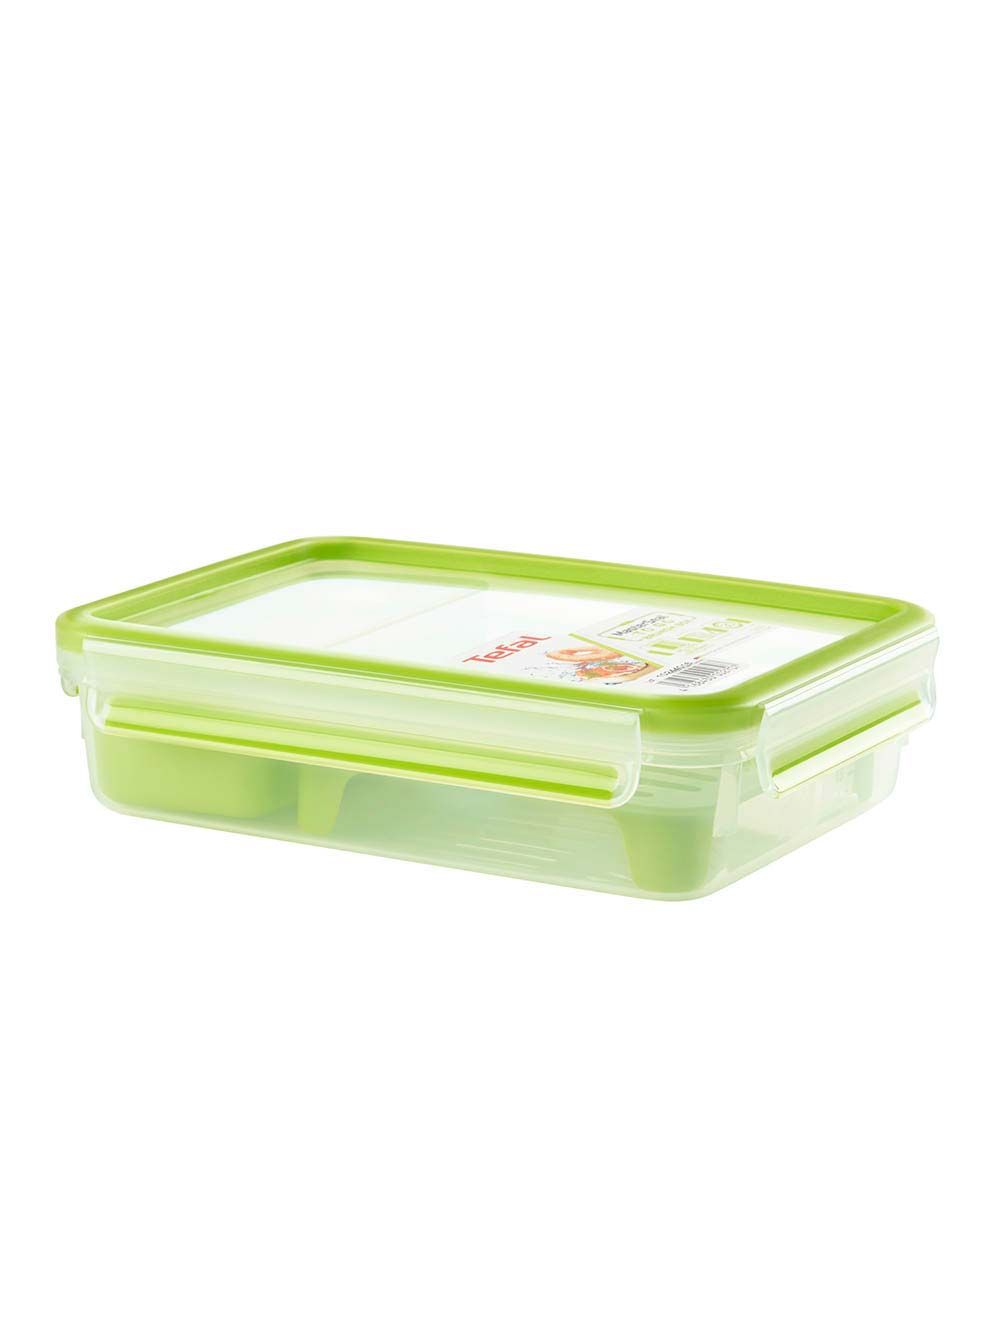 Tefal Masterseal Food Keeper 1.2 L Brunch Box, K3100312